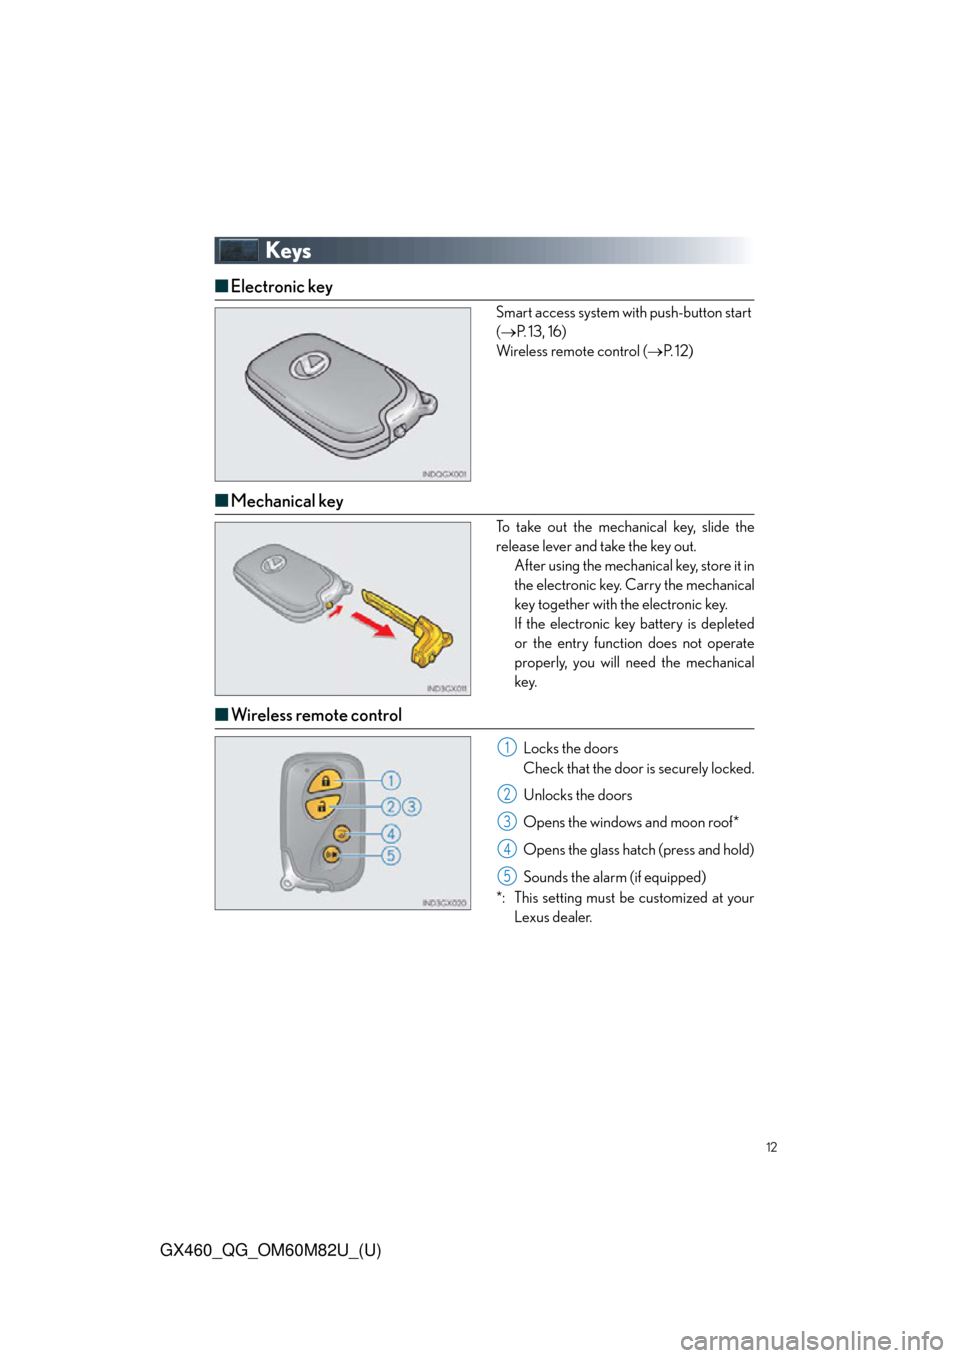 Lexus GX460 2016  Navigation Manual / LEXUS 2016 GX460 OWNERS MANUAL QUICK GUIDE (OM60M82U) 12
GX460_QG_OM60M82U_(U)
Keys
■Electronic key
Smart access system with push-button start 
( P. 13, 16)
Wireless remote control ( P. 1 2 )
■Mechanical key
To take out the mechan ical key, sli